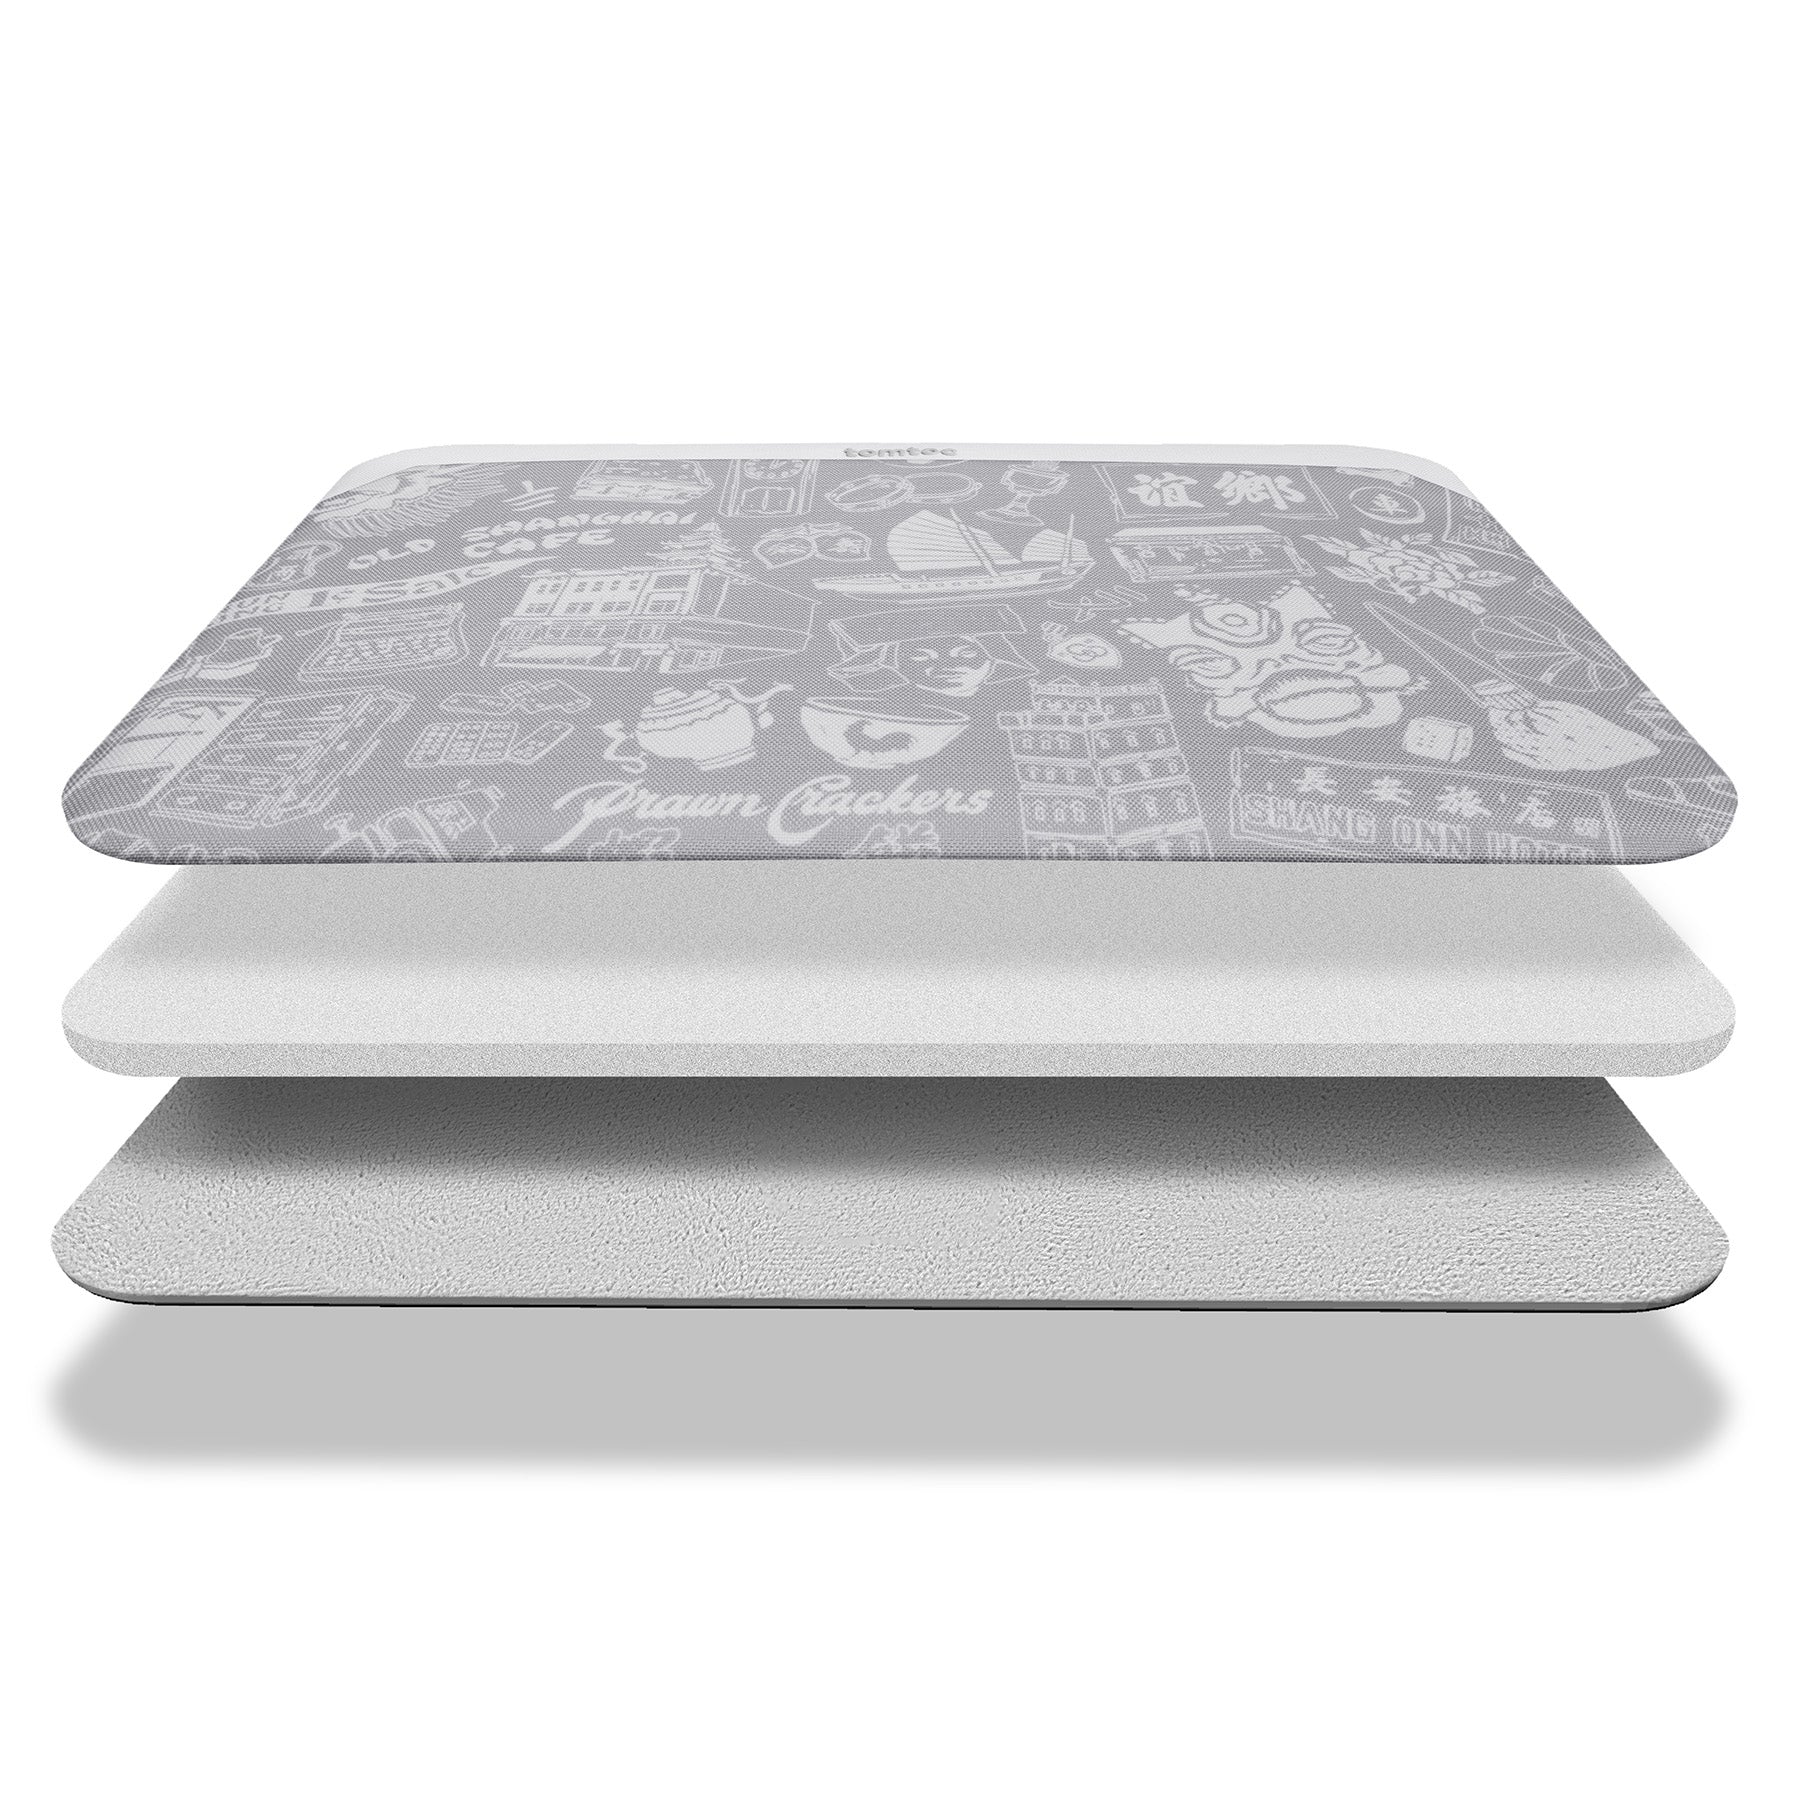 tomtoc OCHM 13 Inch Versatile 360 Protective Laptop Sleeve / MacBook Sleeve - Gray